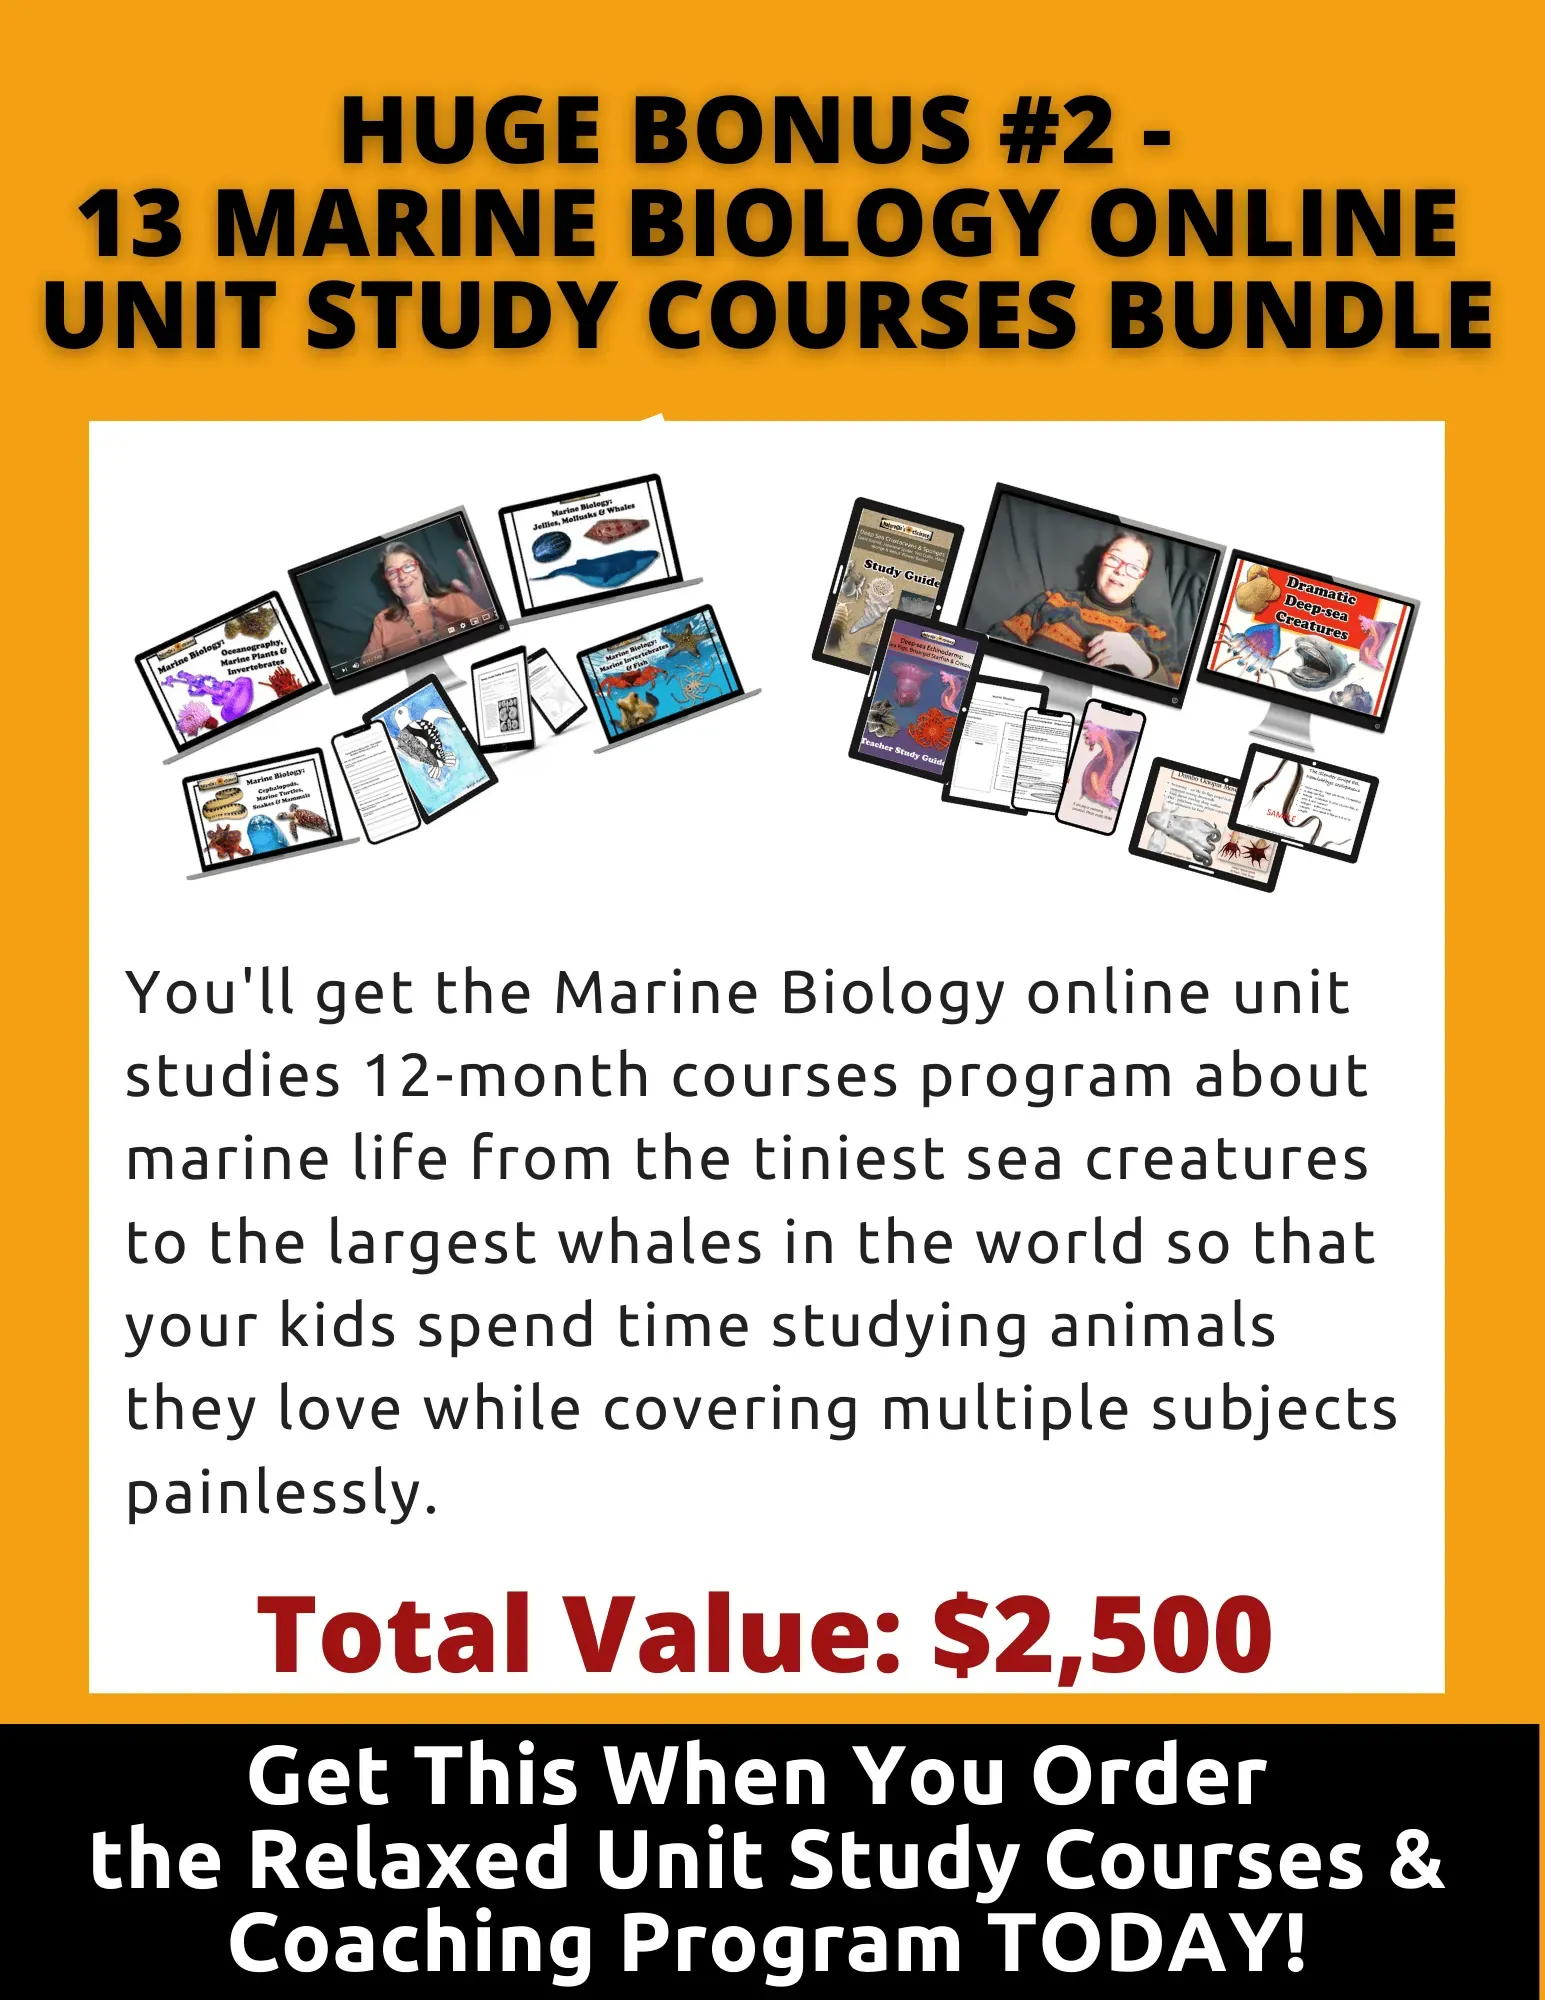 BONUS #2 - Marine Biology Course BUNDLE